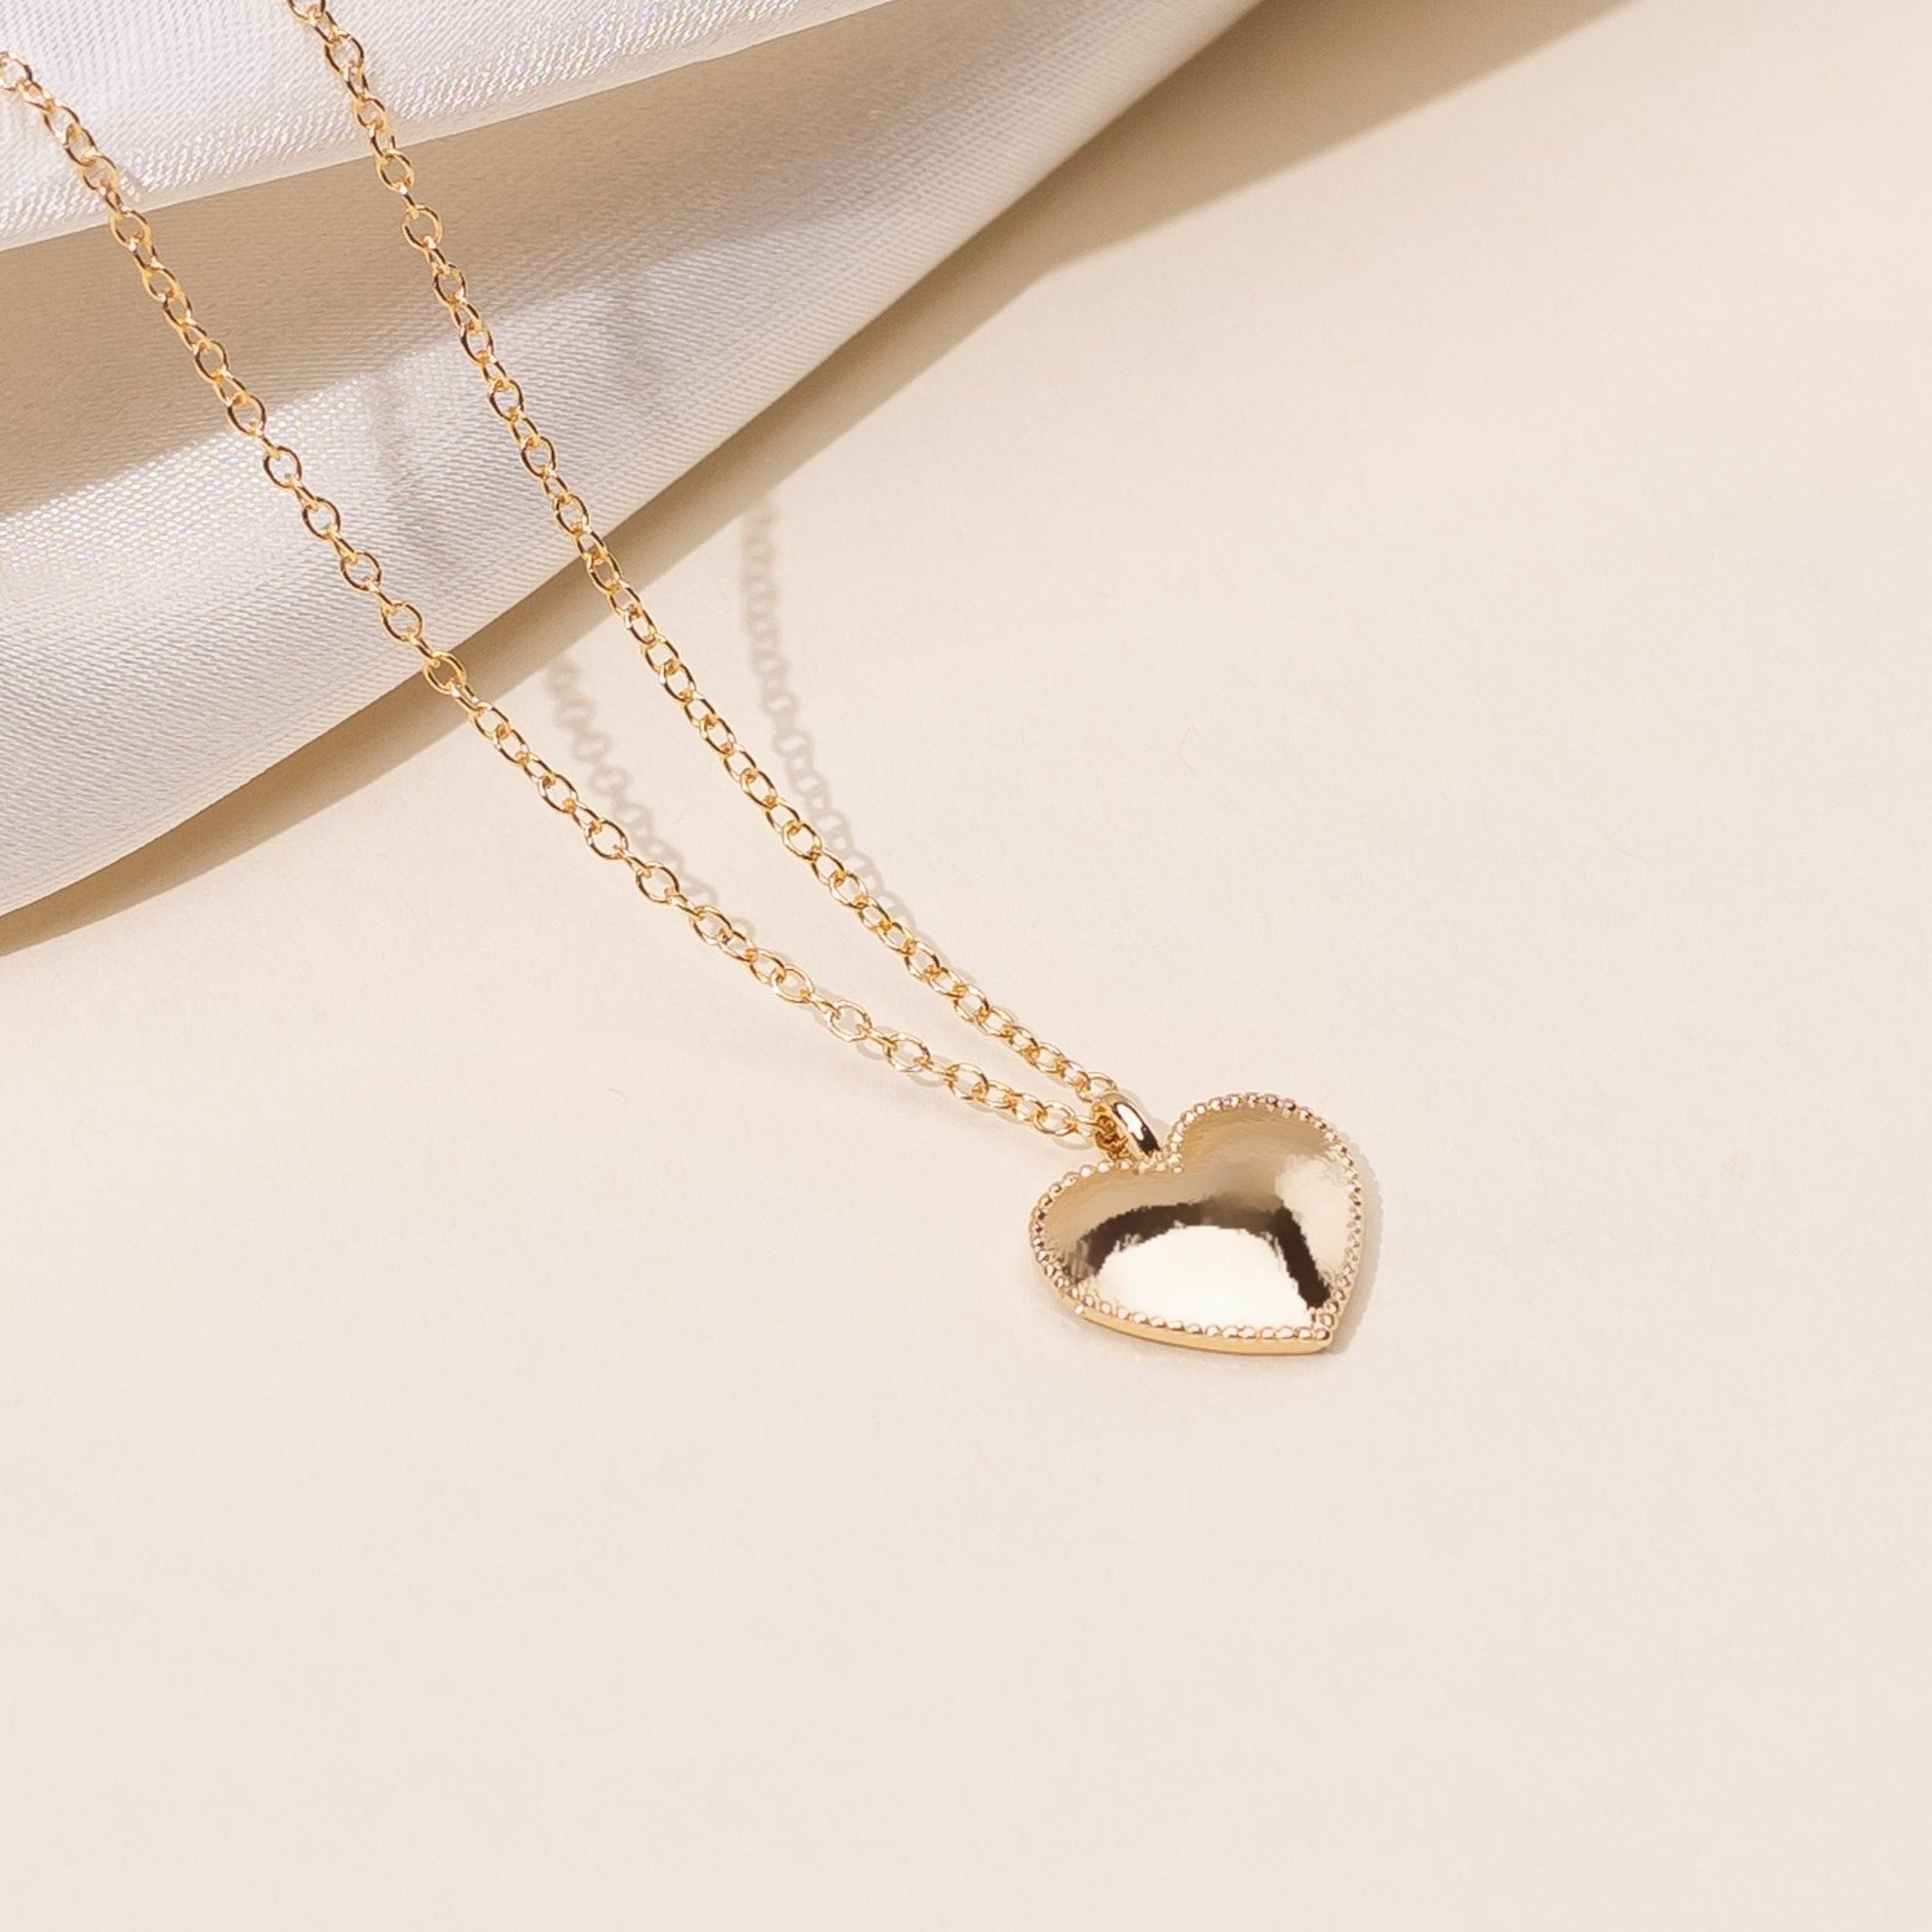 Beaded Heart Necklace_dainty minimal heart necklace_handmade in America by Katie Dean Jewelry